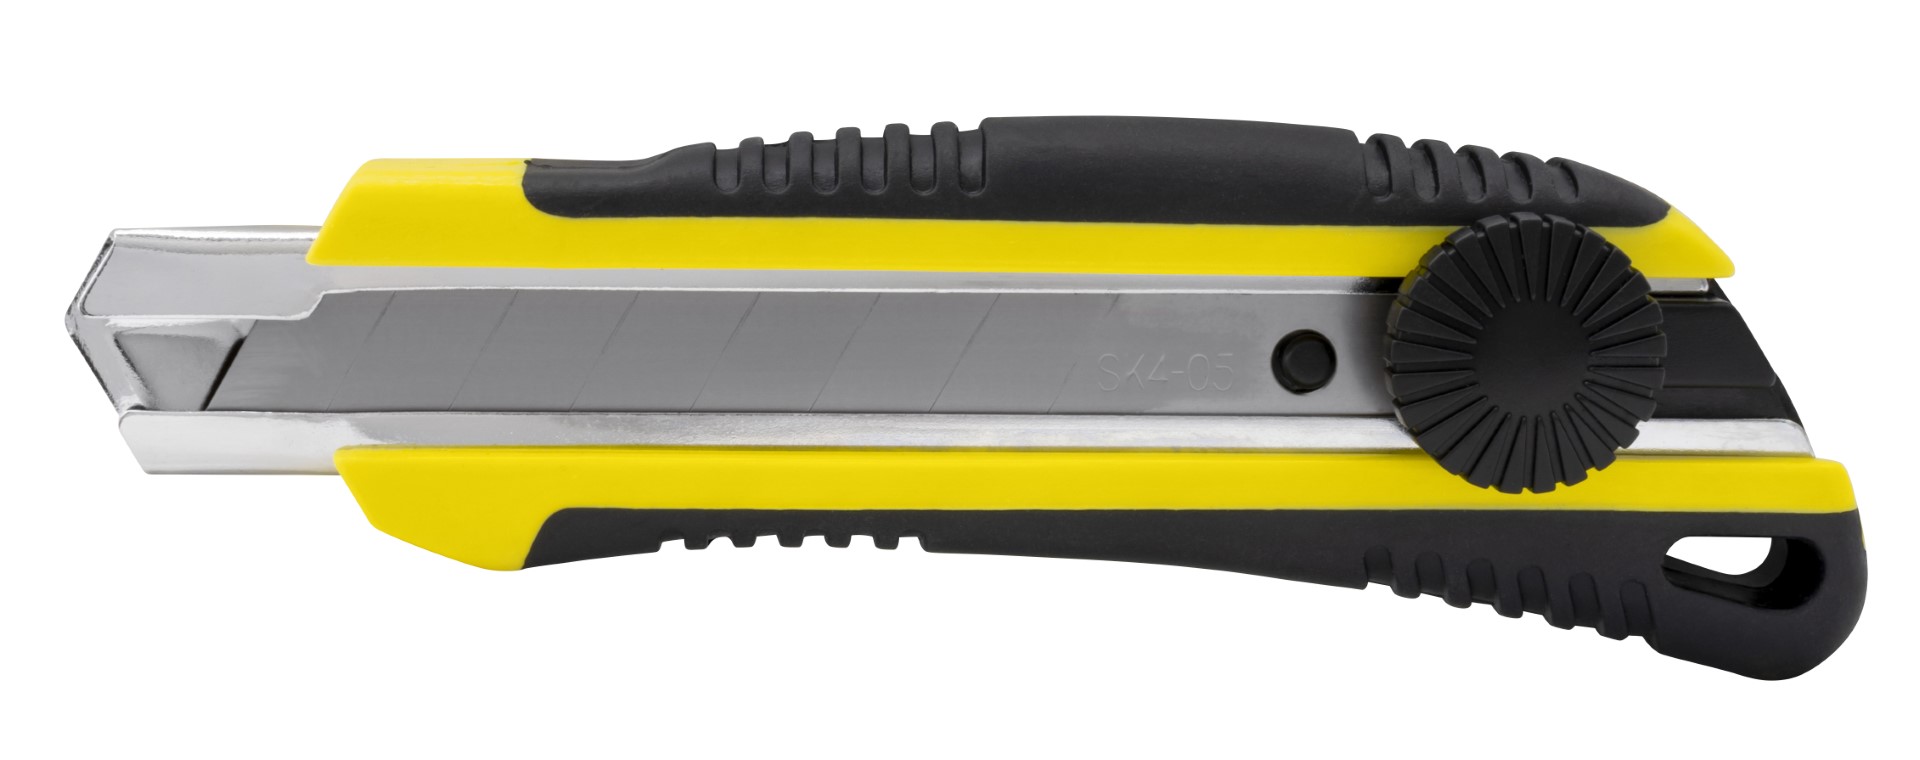 Kniv med Non-Slip Gummigrep, 18 mm Knivblad, Skrulås og Magasin 2 Ekstra Knivblader 410003